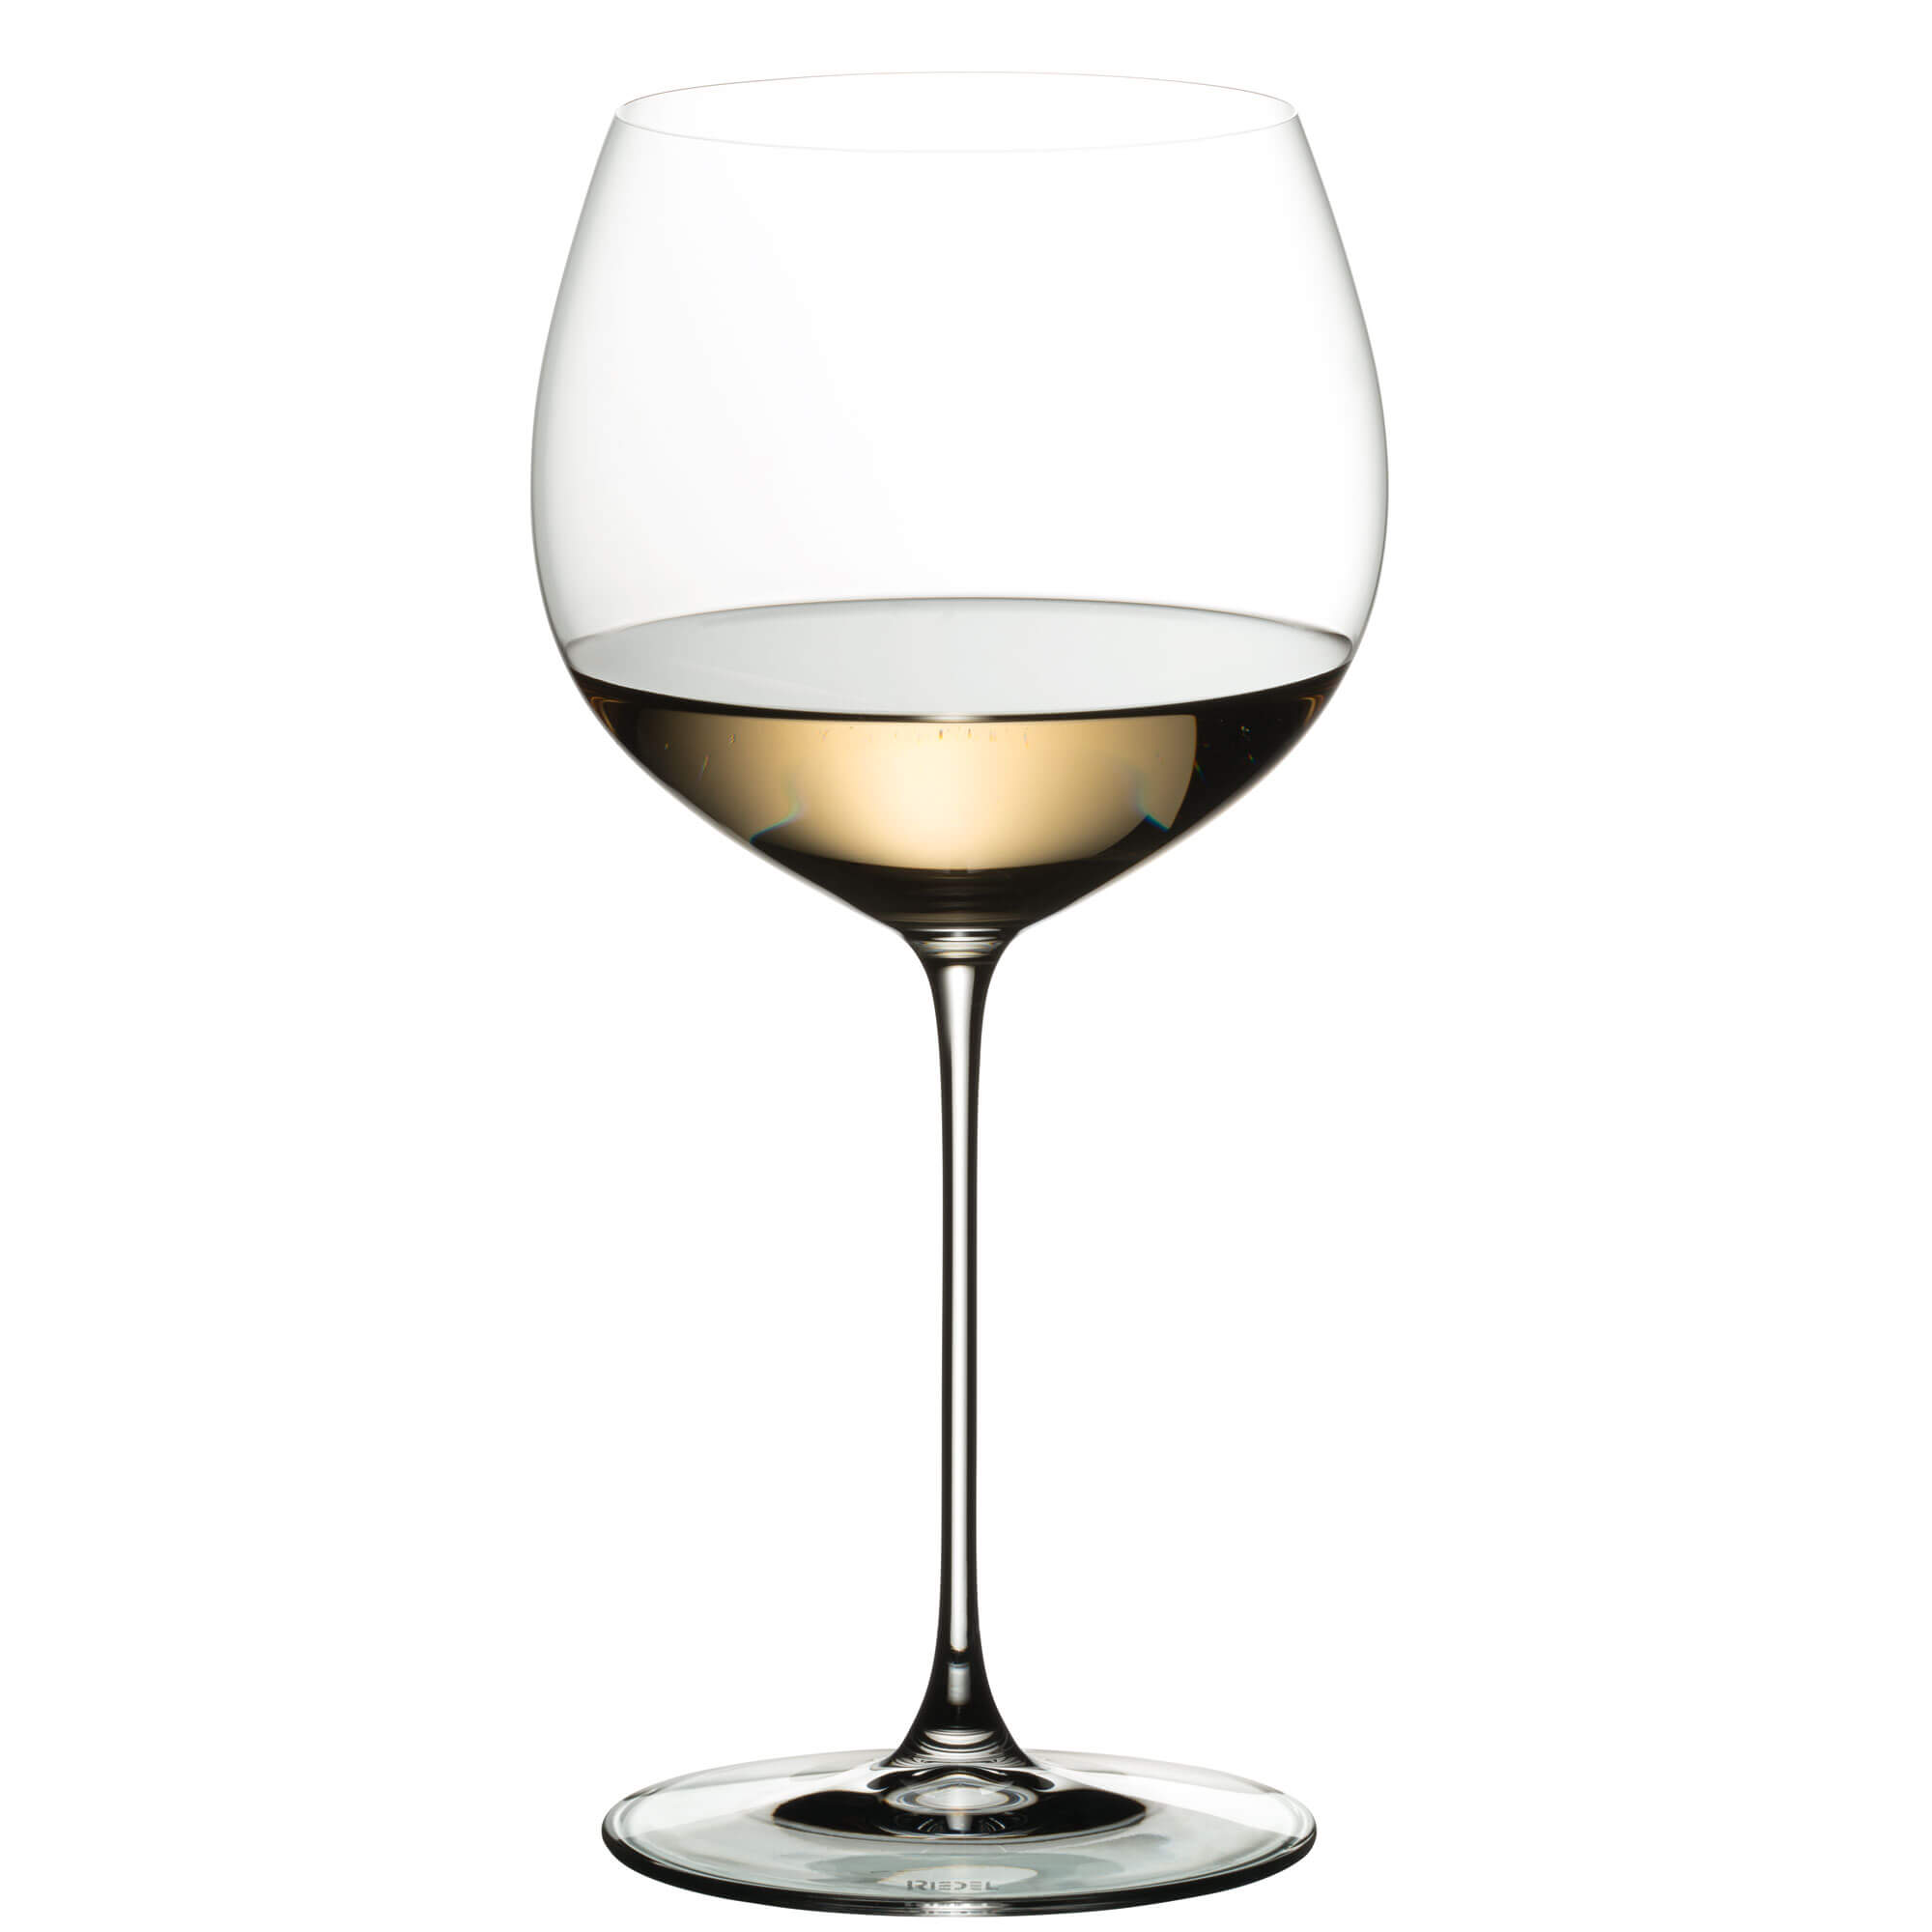 Oaked Chardonnay glass Veritas, Riedel - 620ml (2 pcs.)